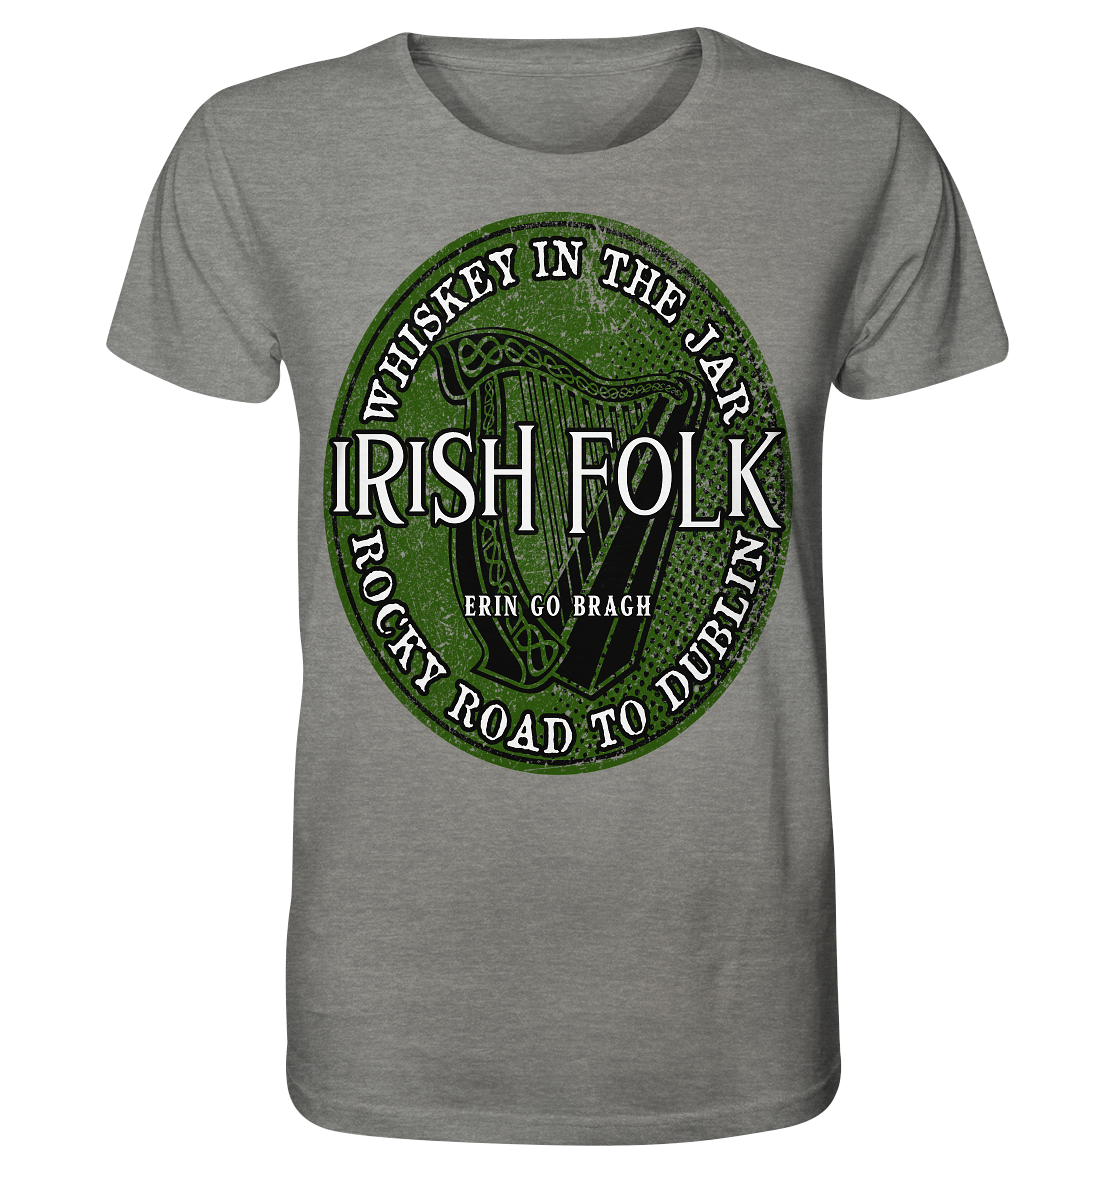 Irish Folk "Erin Go Bragh" - Organic Shirt (meliert)